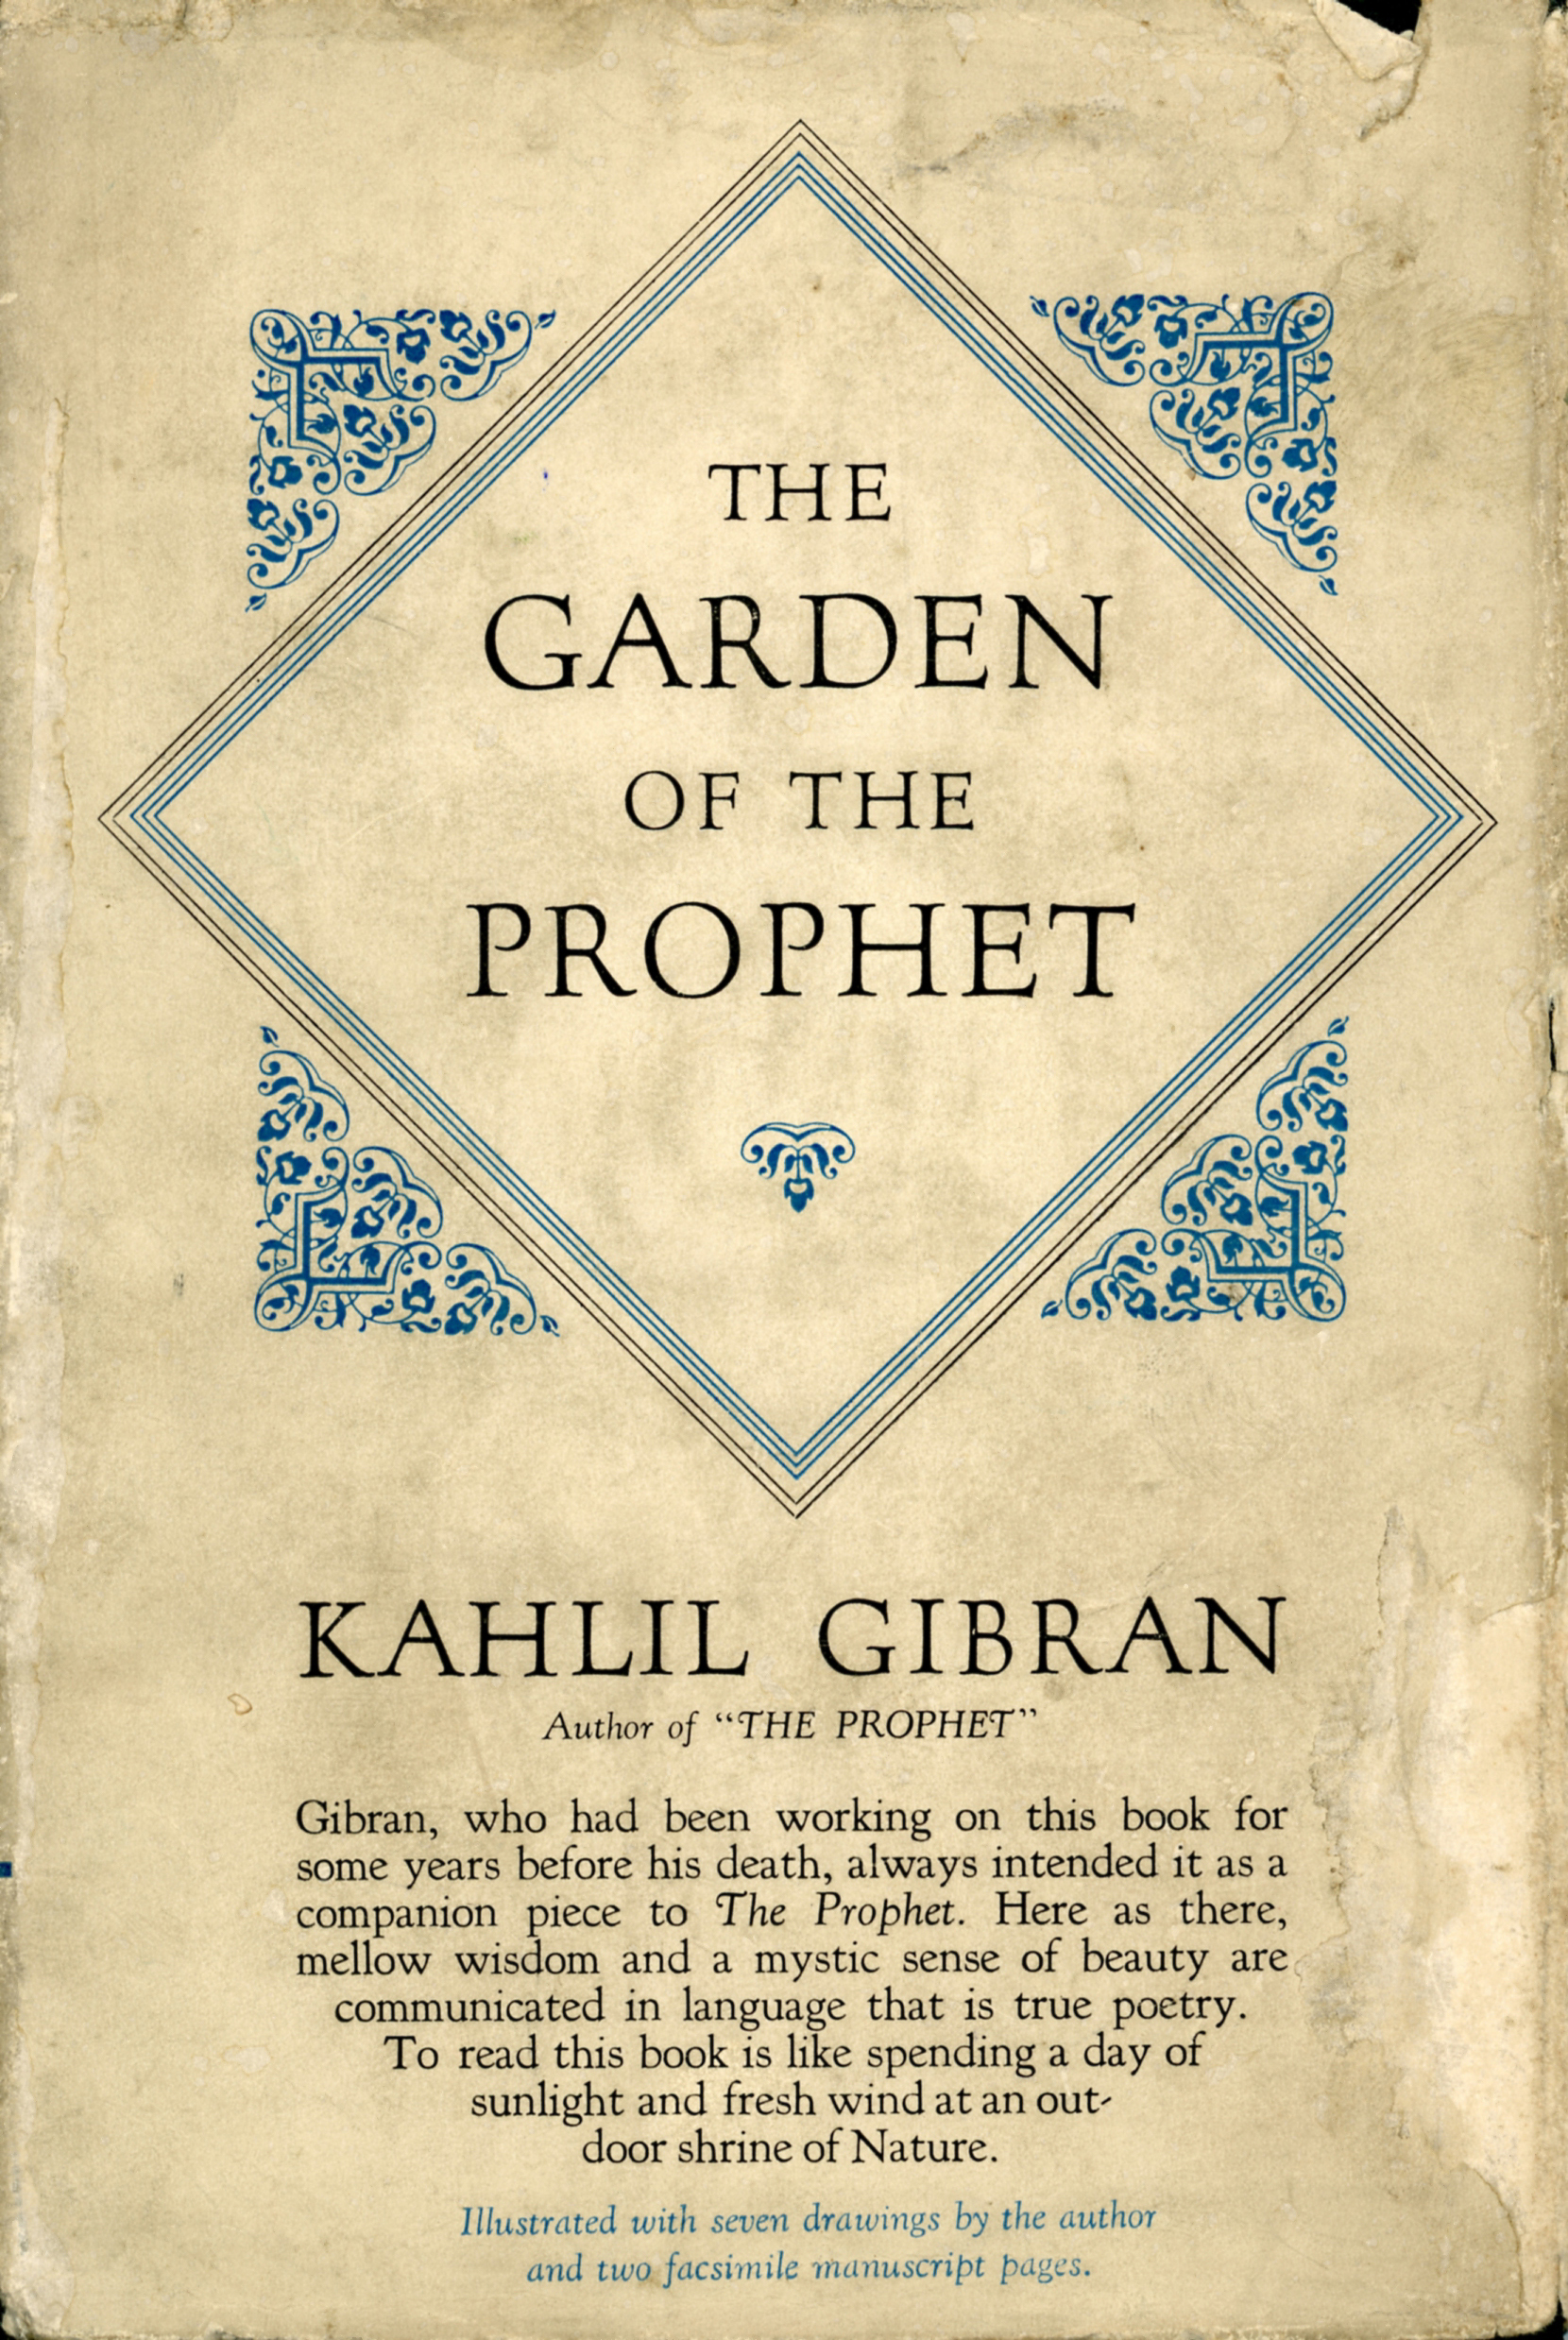 K. Gibran, The Garden of the Prophet, New York: Knopf, 1933.